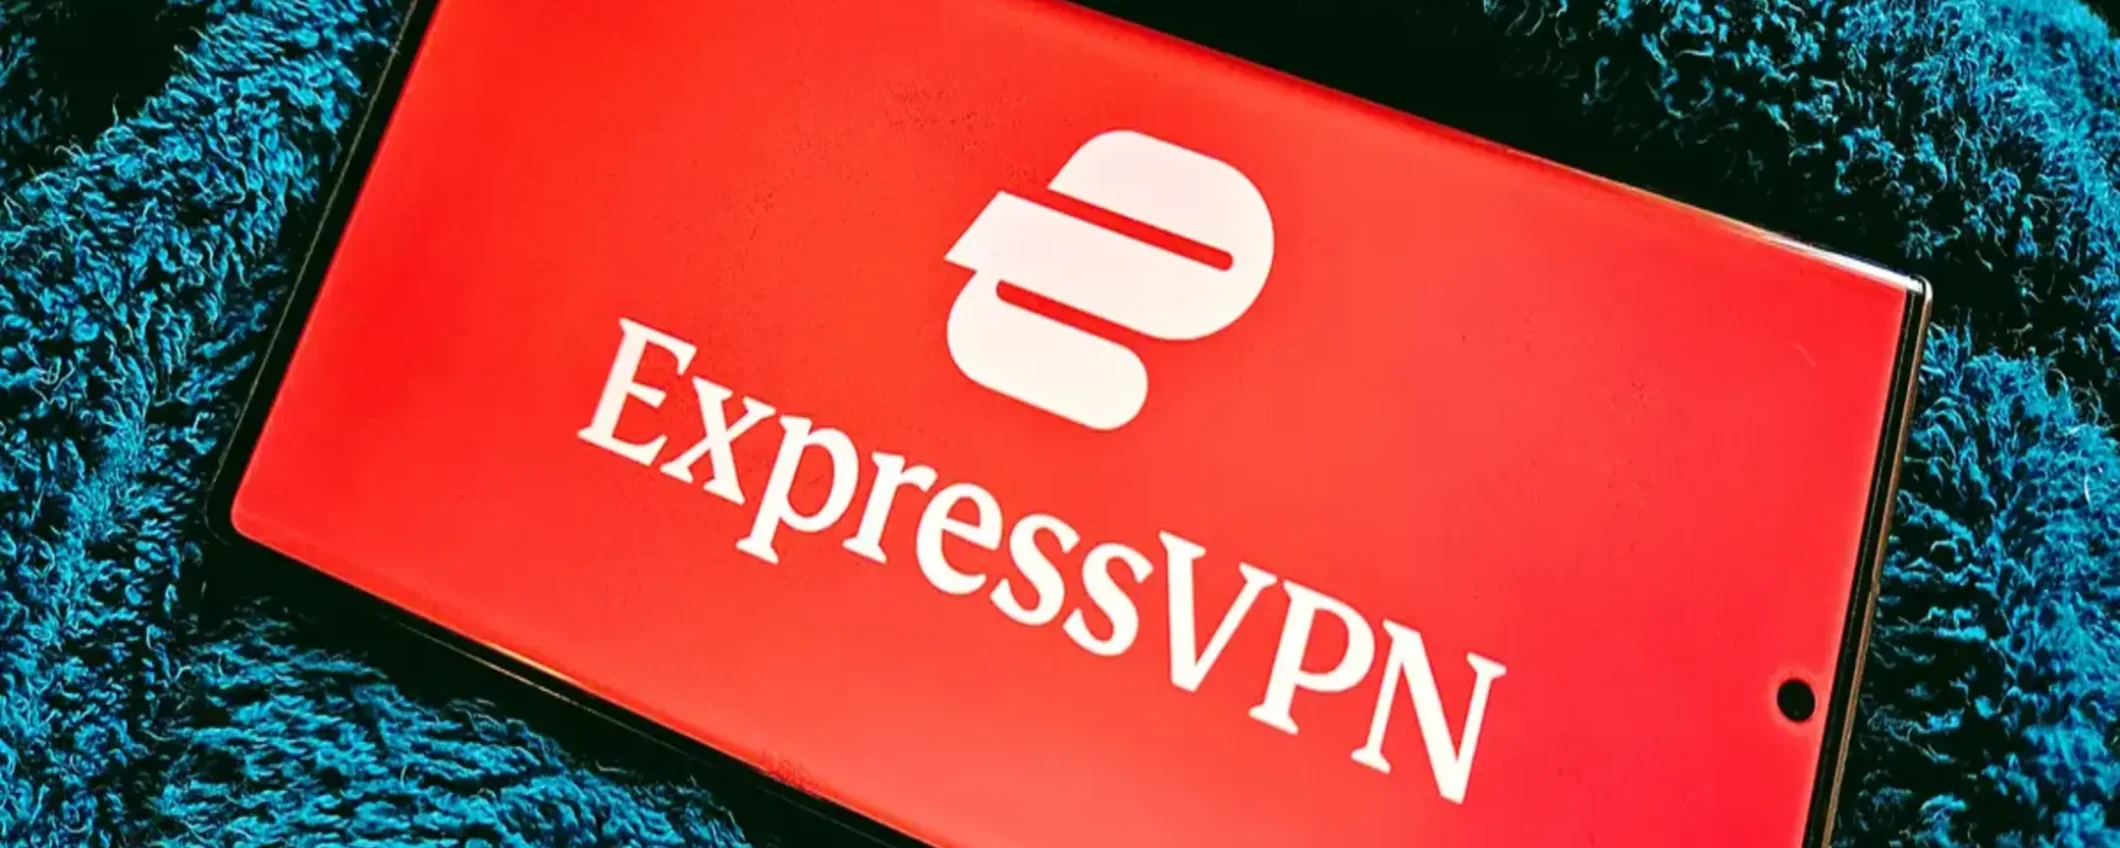 ExpressVPN in offerta: 12 mesi + 3 mesi gratuiti a soli 6,32€/mese